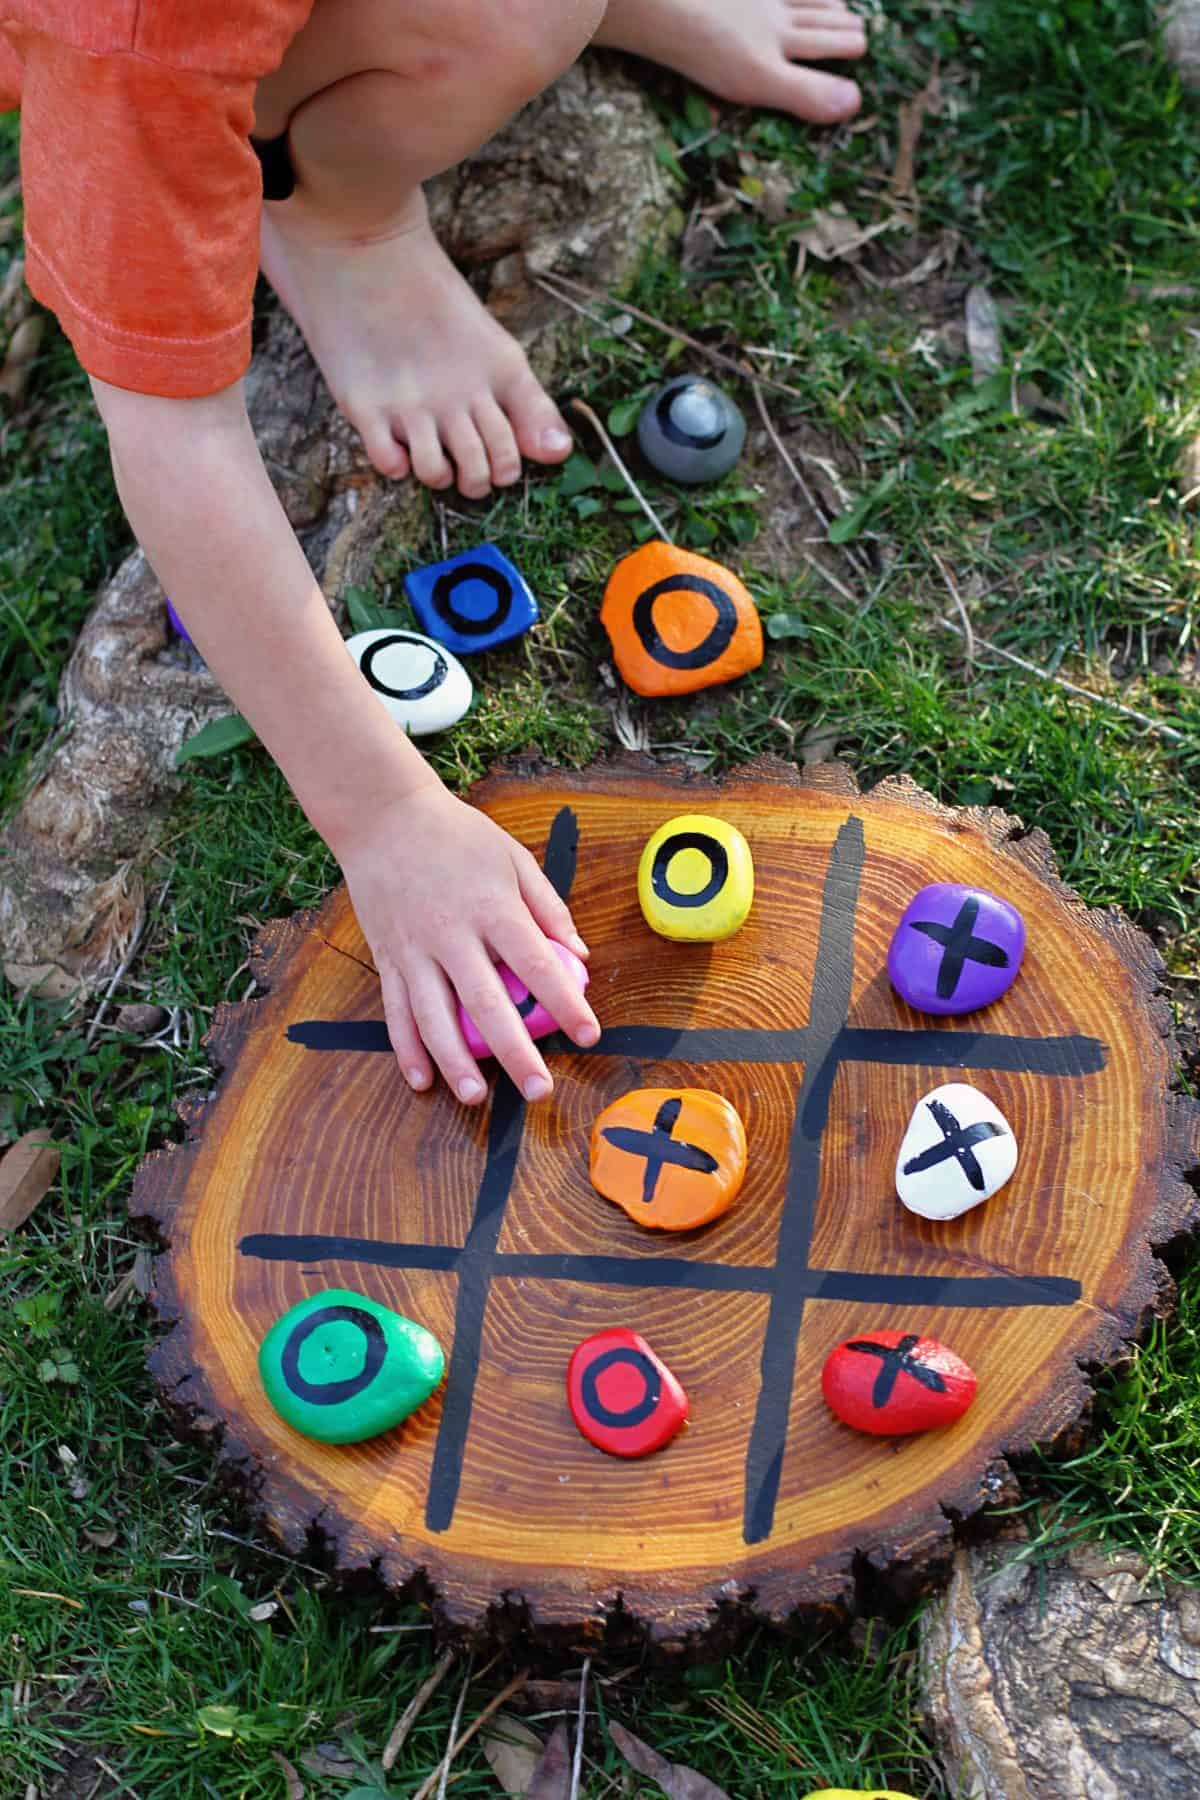 DIY wooden board tic-tac-toe painted rocks